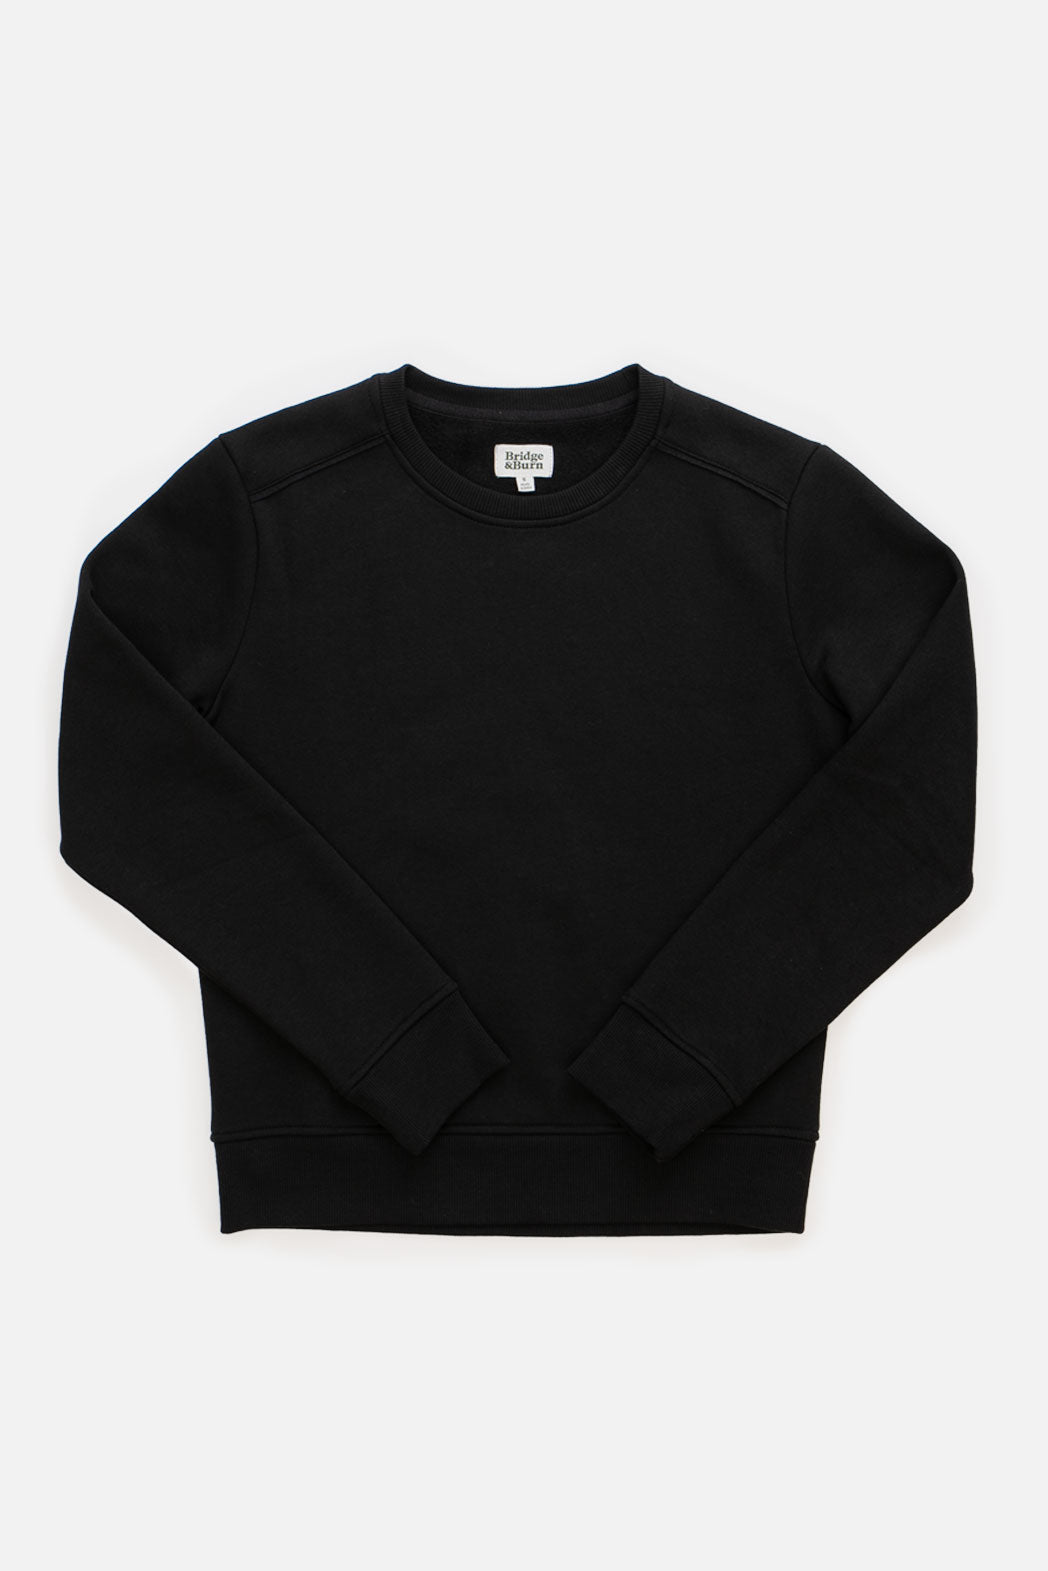 Linnton Crew Sweatshirt / Black.